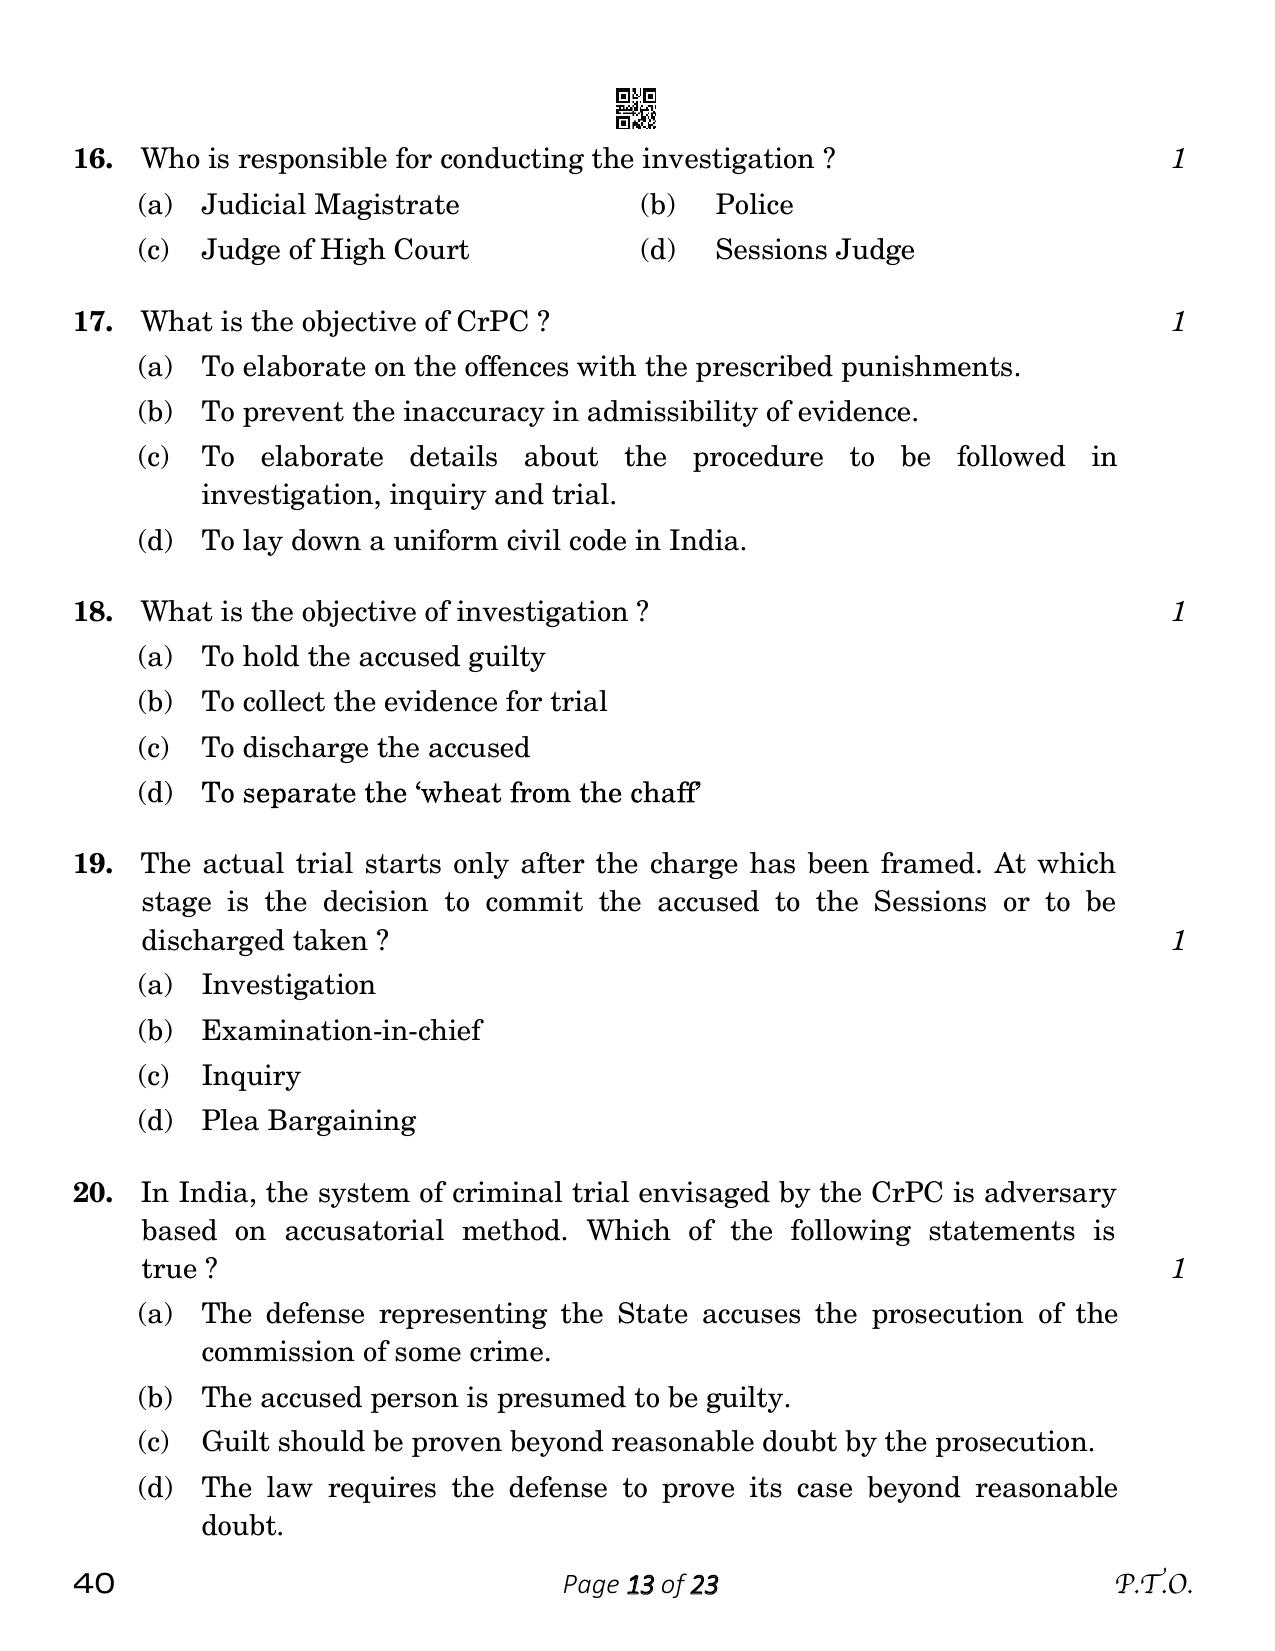 CBSE Class 12 Legal Studies (Compartment) 2023 Question Paper - Page 13